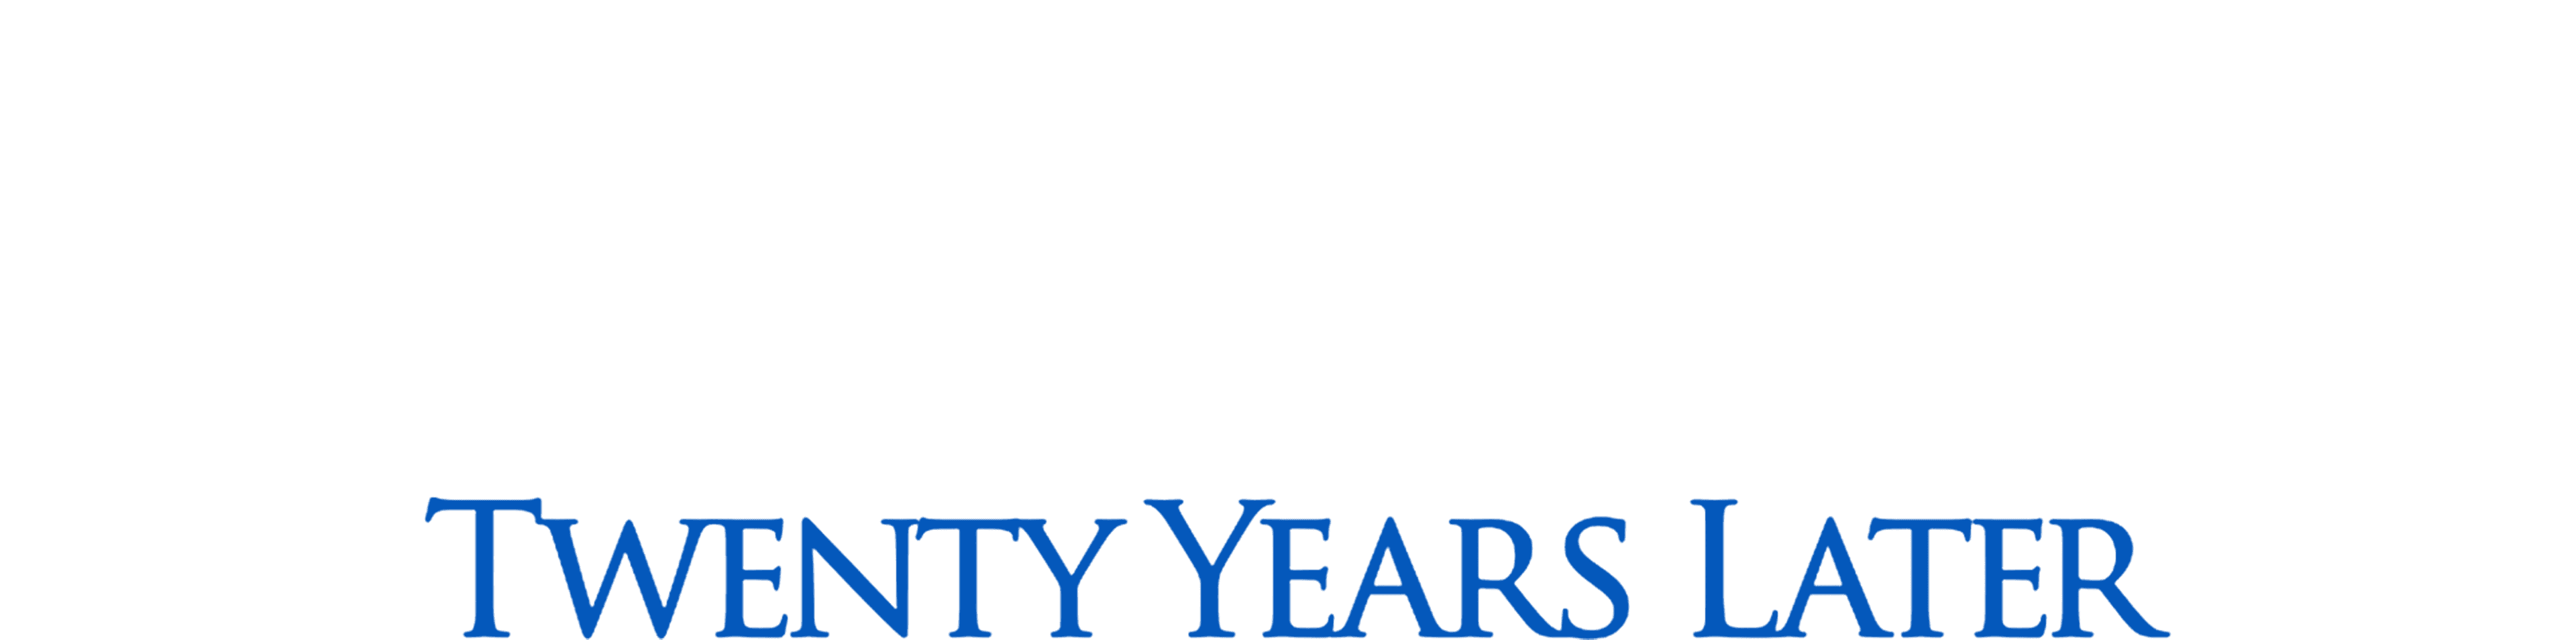 The Babies of 9/11: Twenty Years Later logo